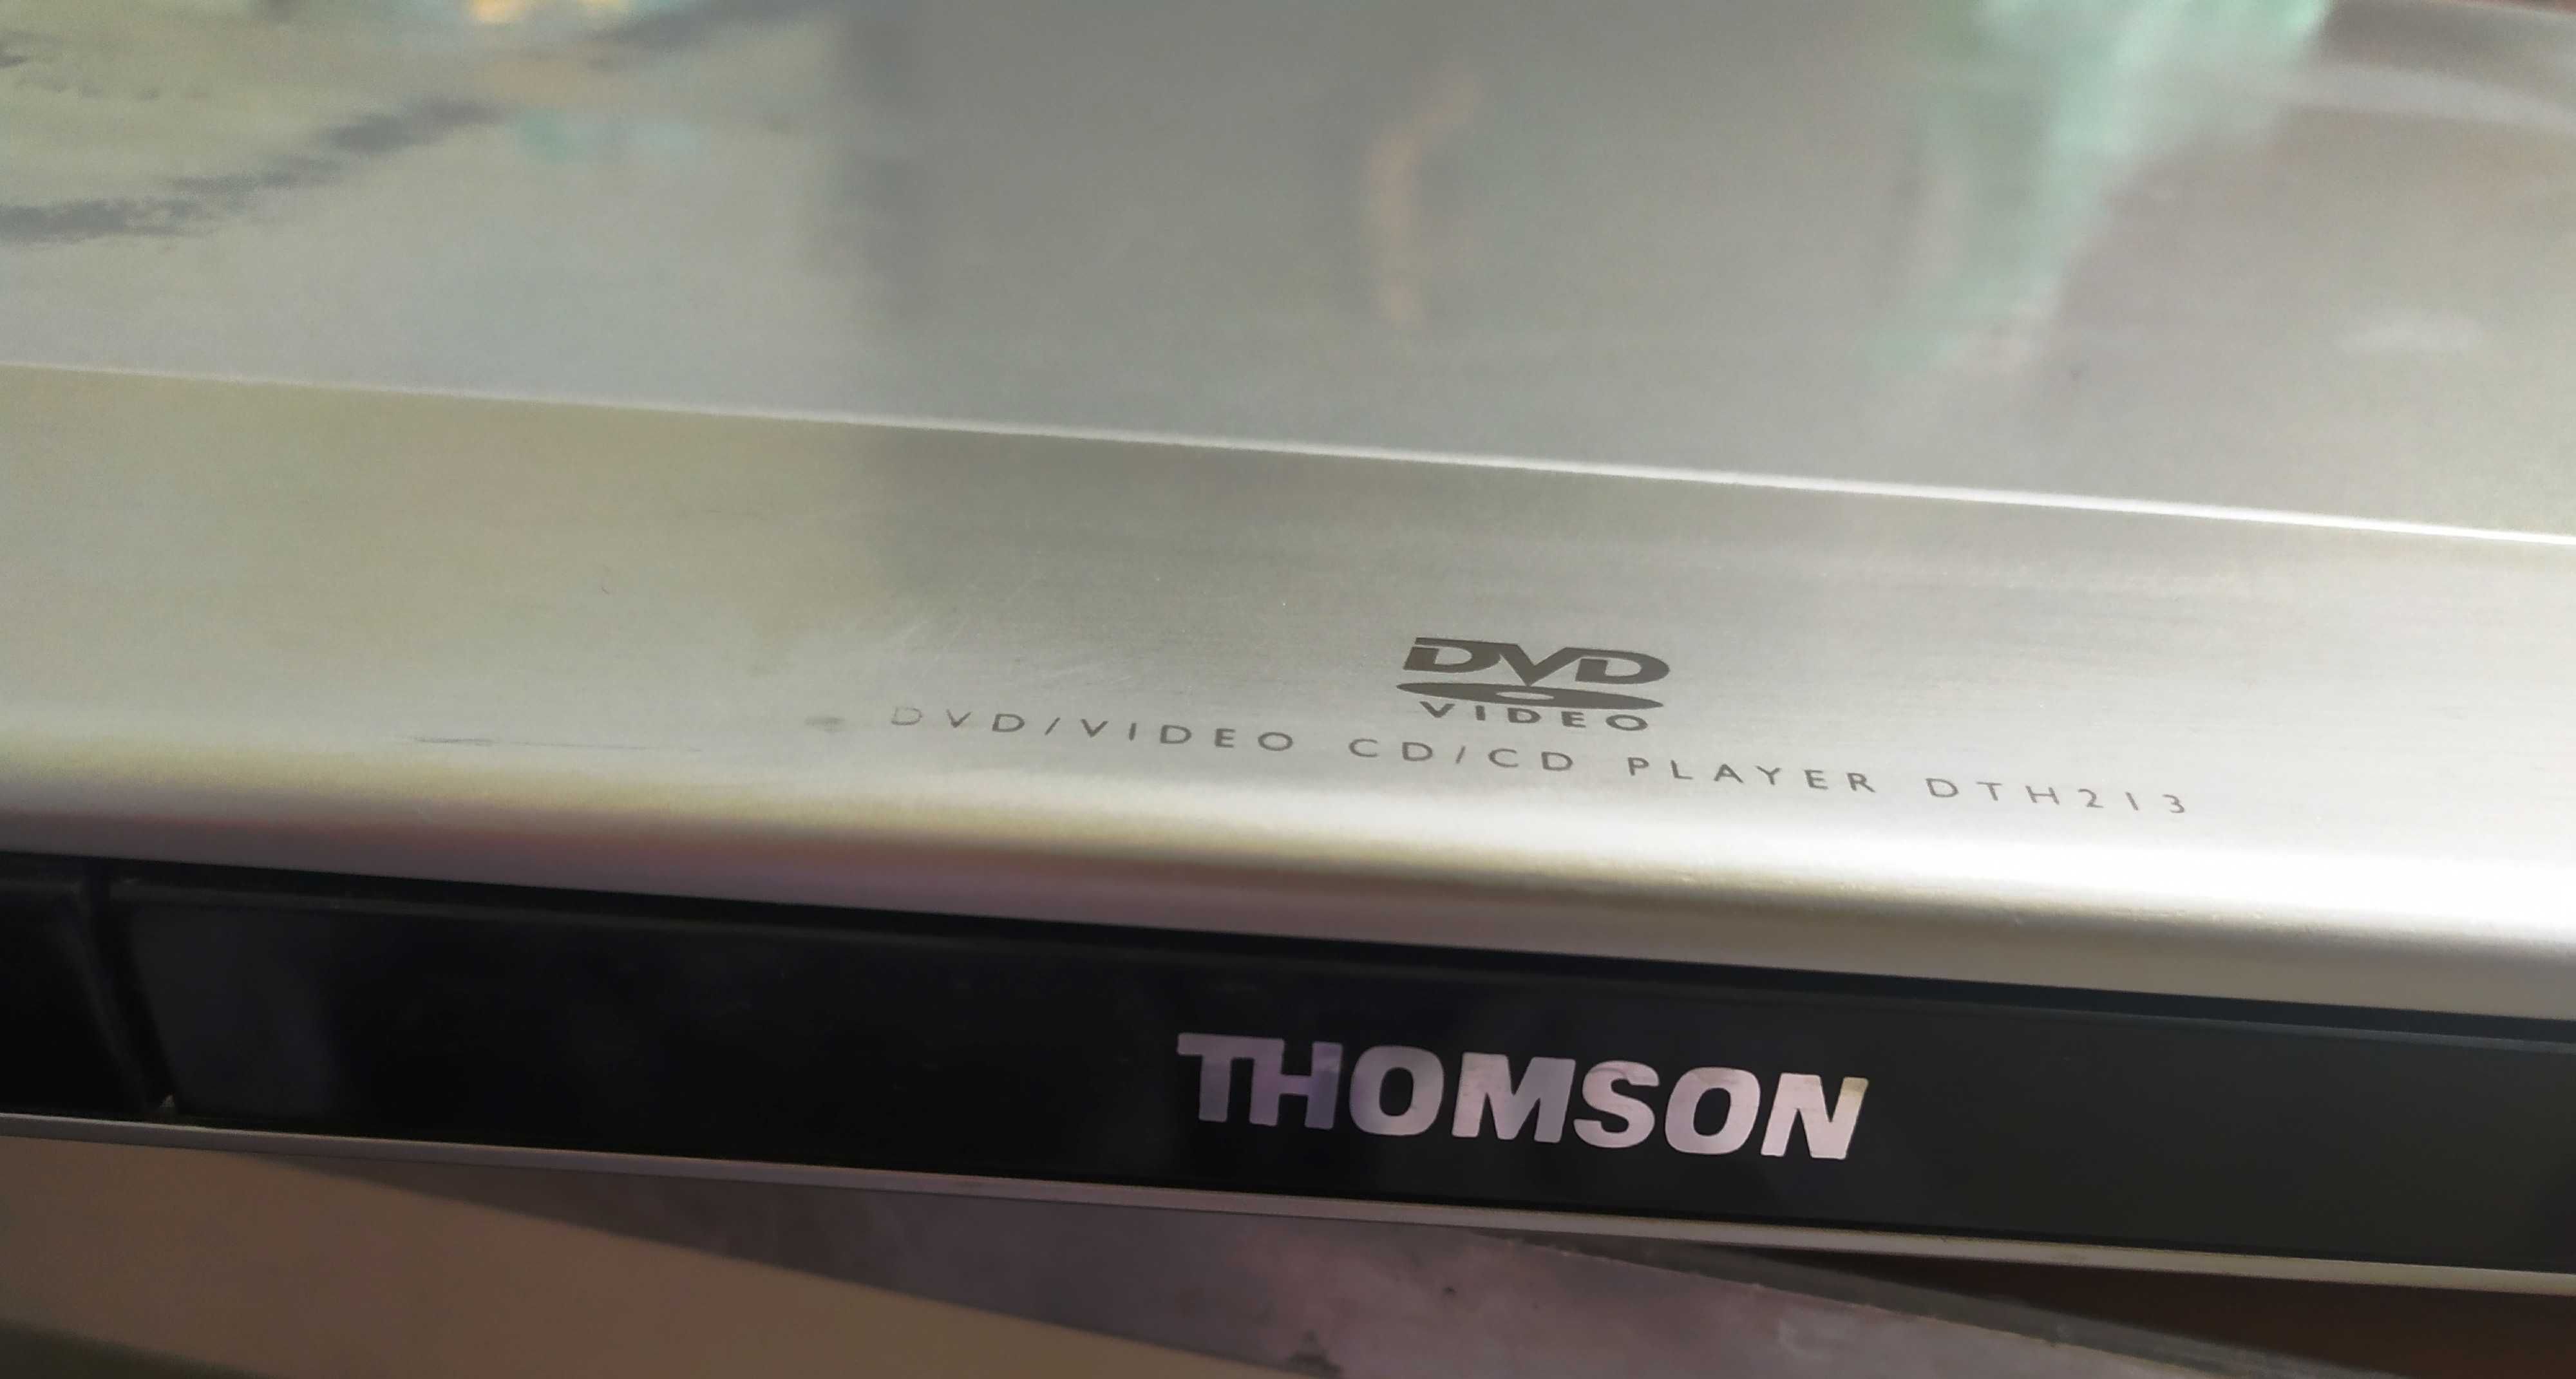 DVD Thomson дивиди